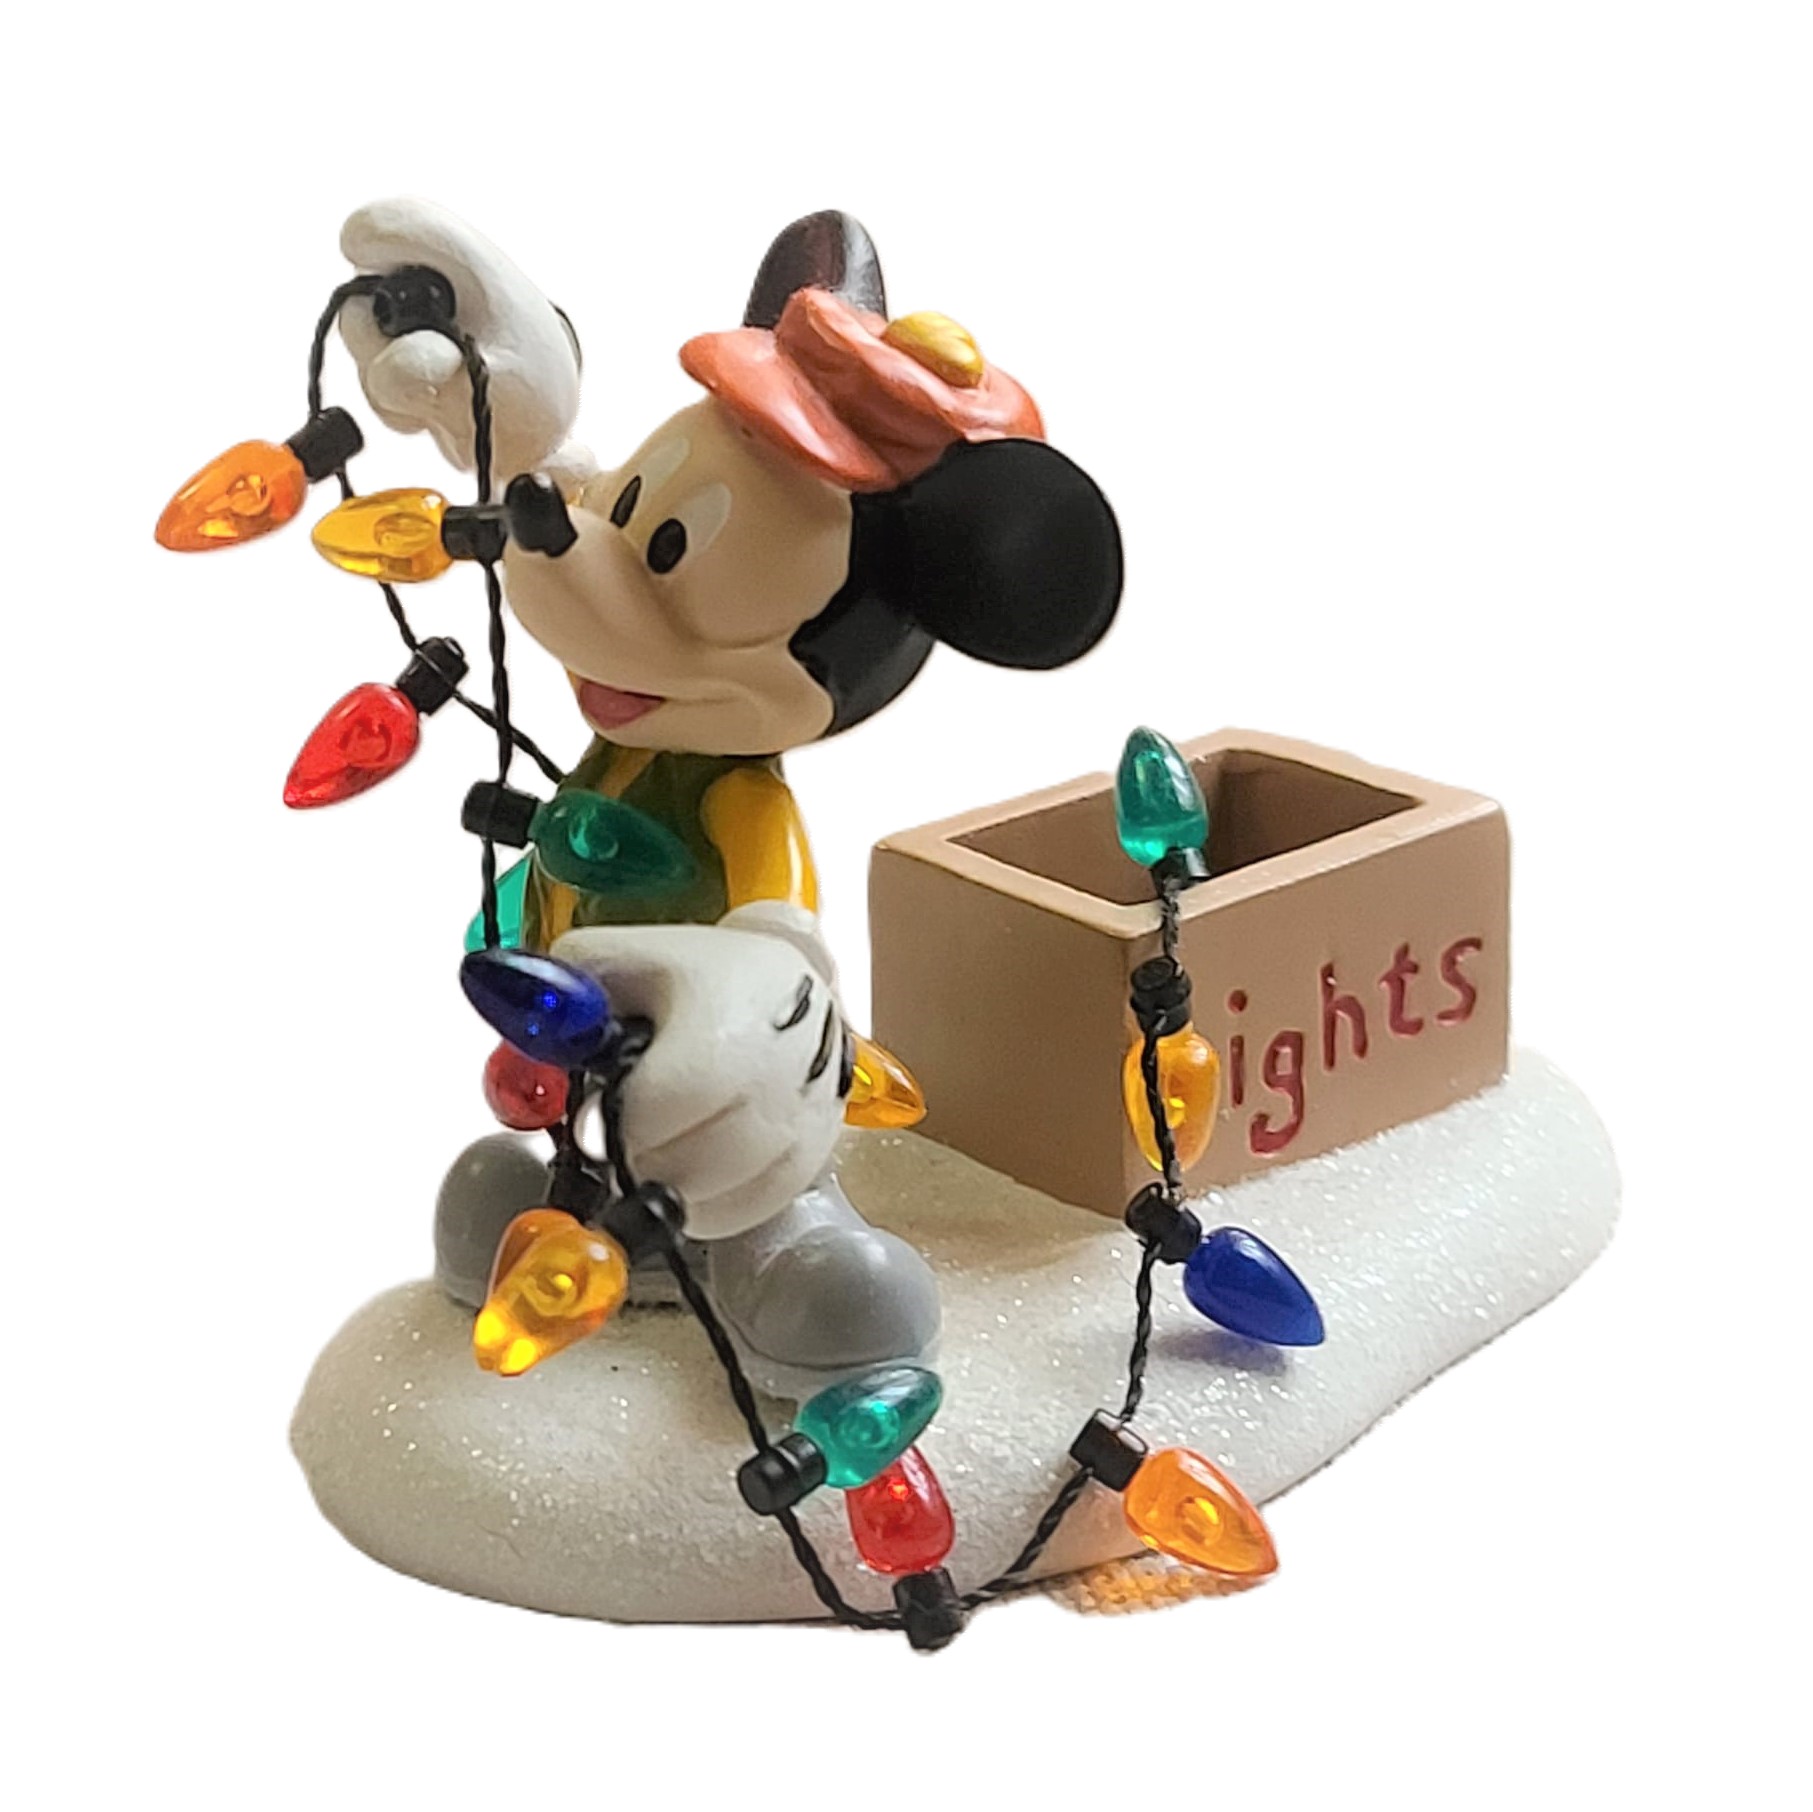 Department 56 Disney Christmas Mickey's Lightup Christmas